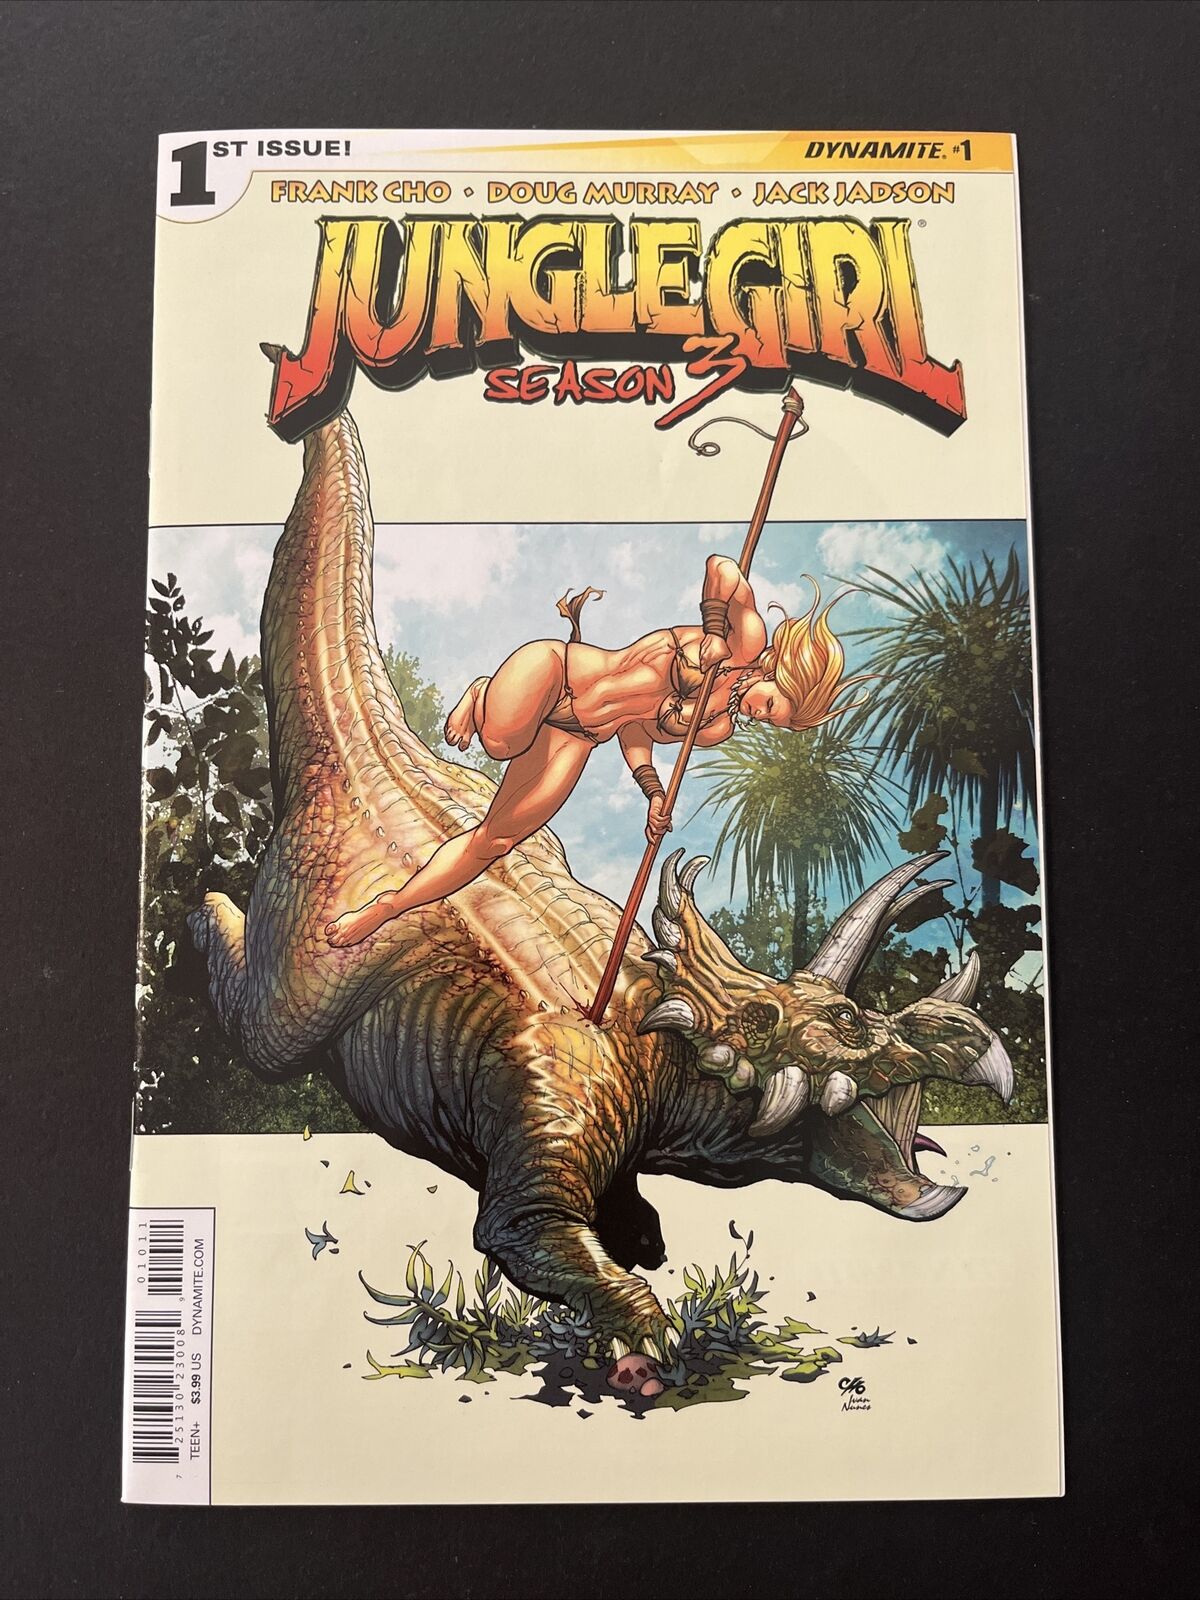 Jungle Girl Season 3 #1 VF 2015 Frank Cho Dynamite Comics